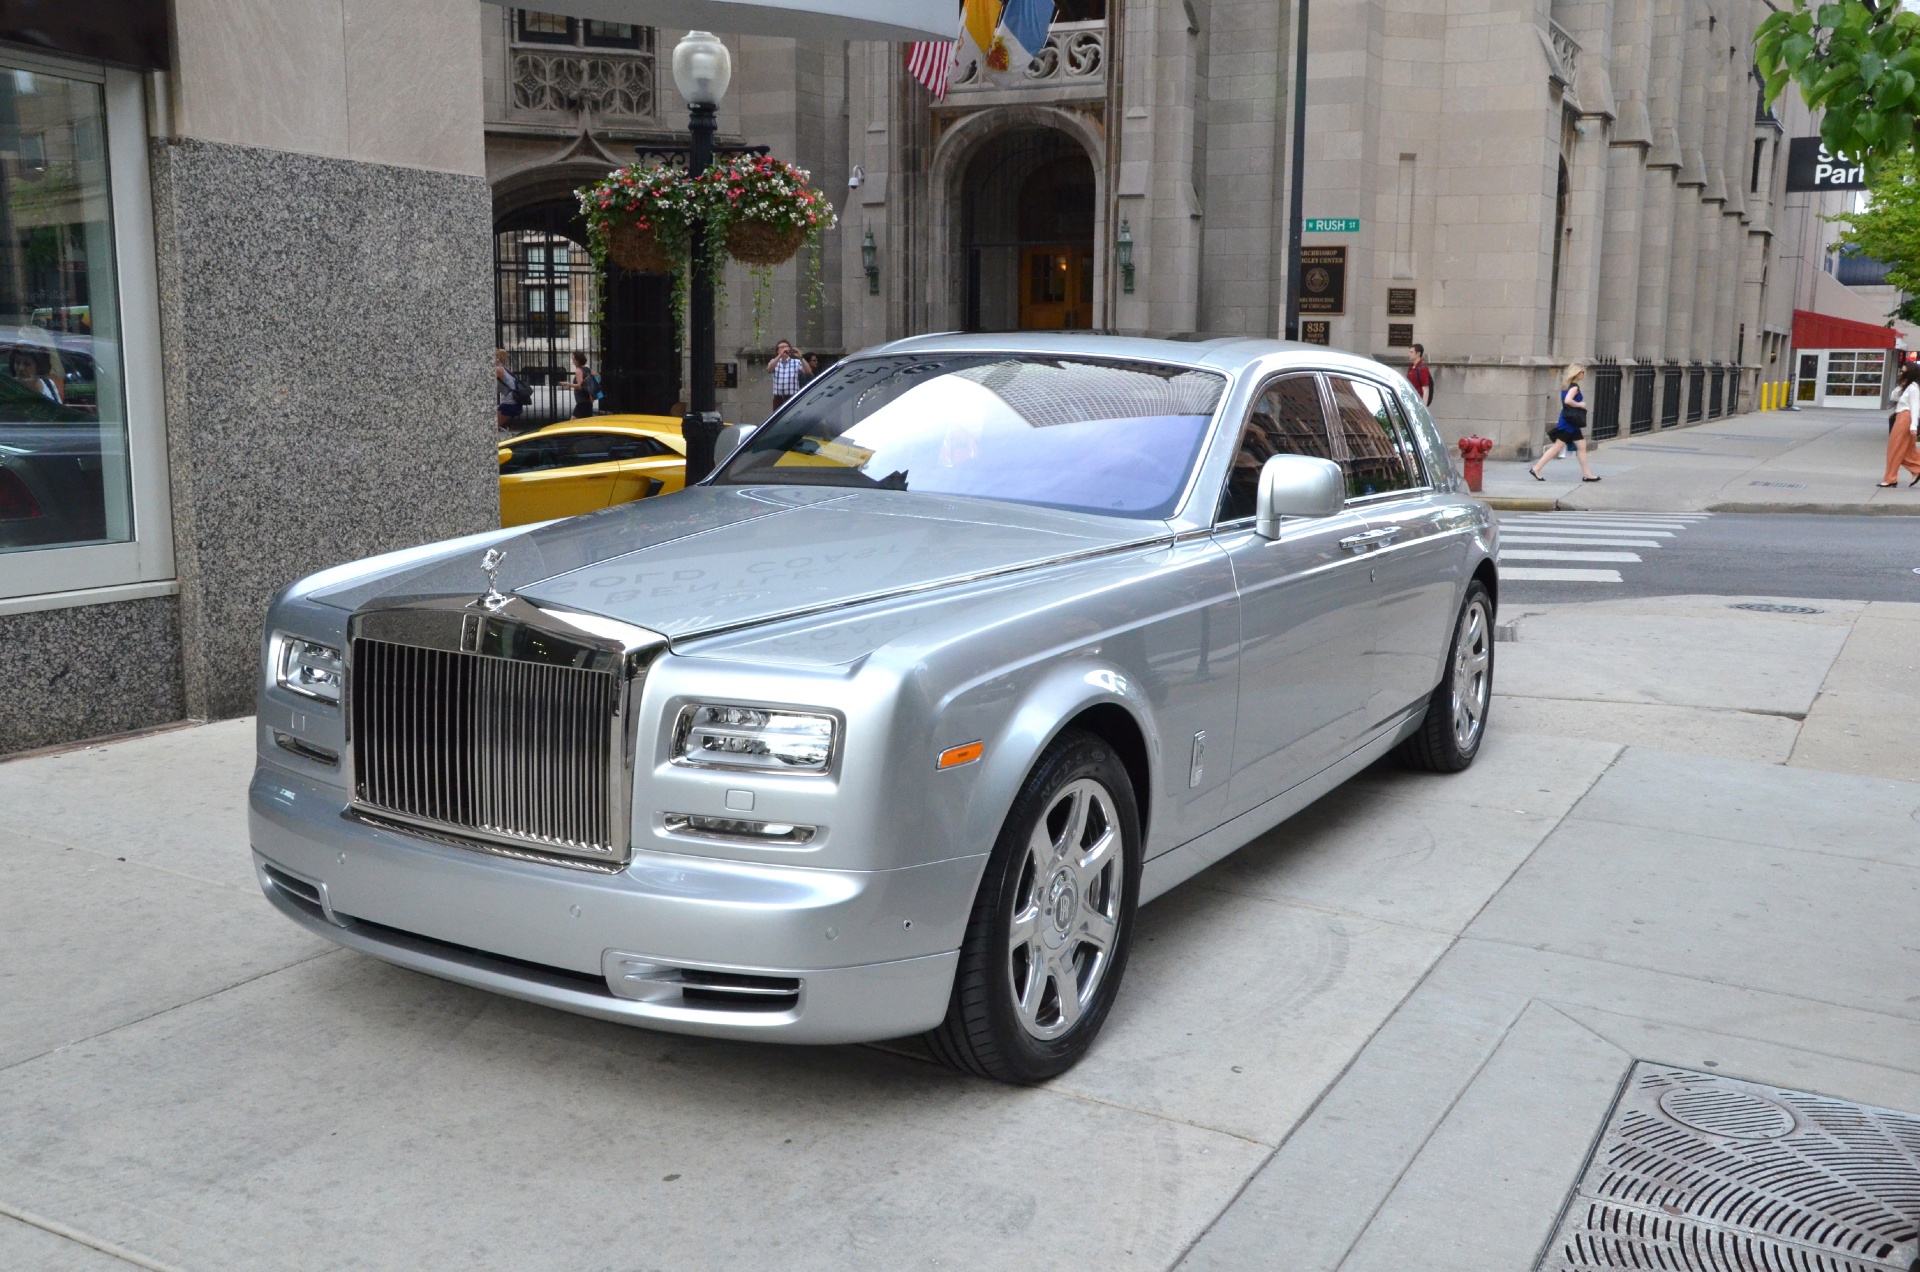 2013 RollsRoyce Phantom Stock  GC3623 for sale near Chicago IL  IL Rolls Royce Dealer